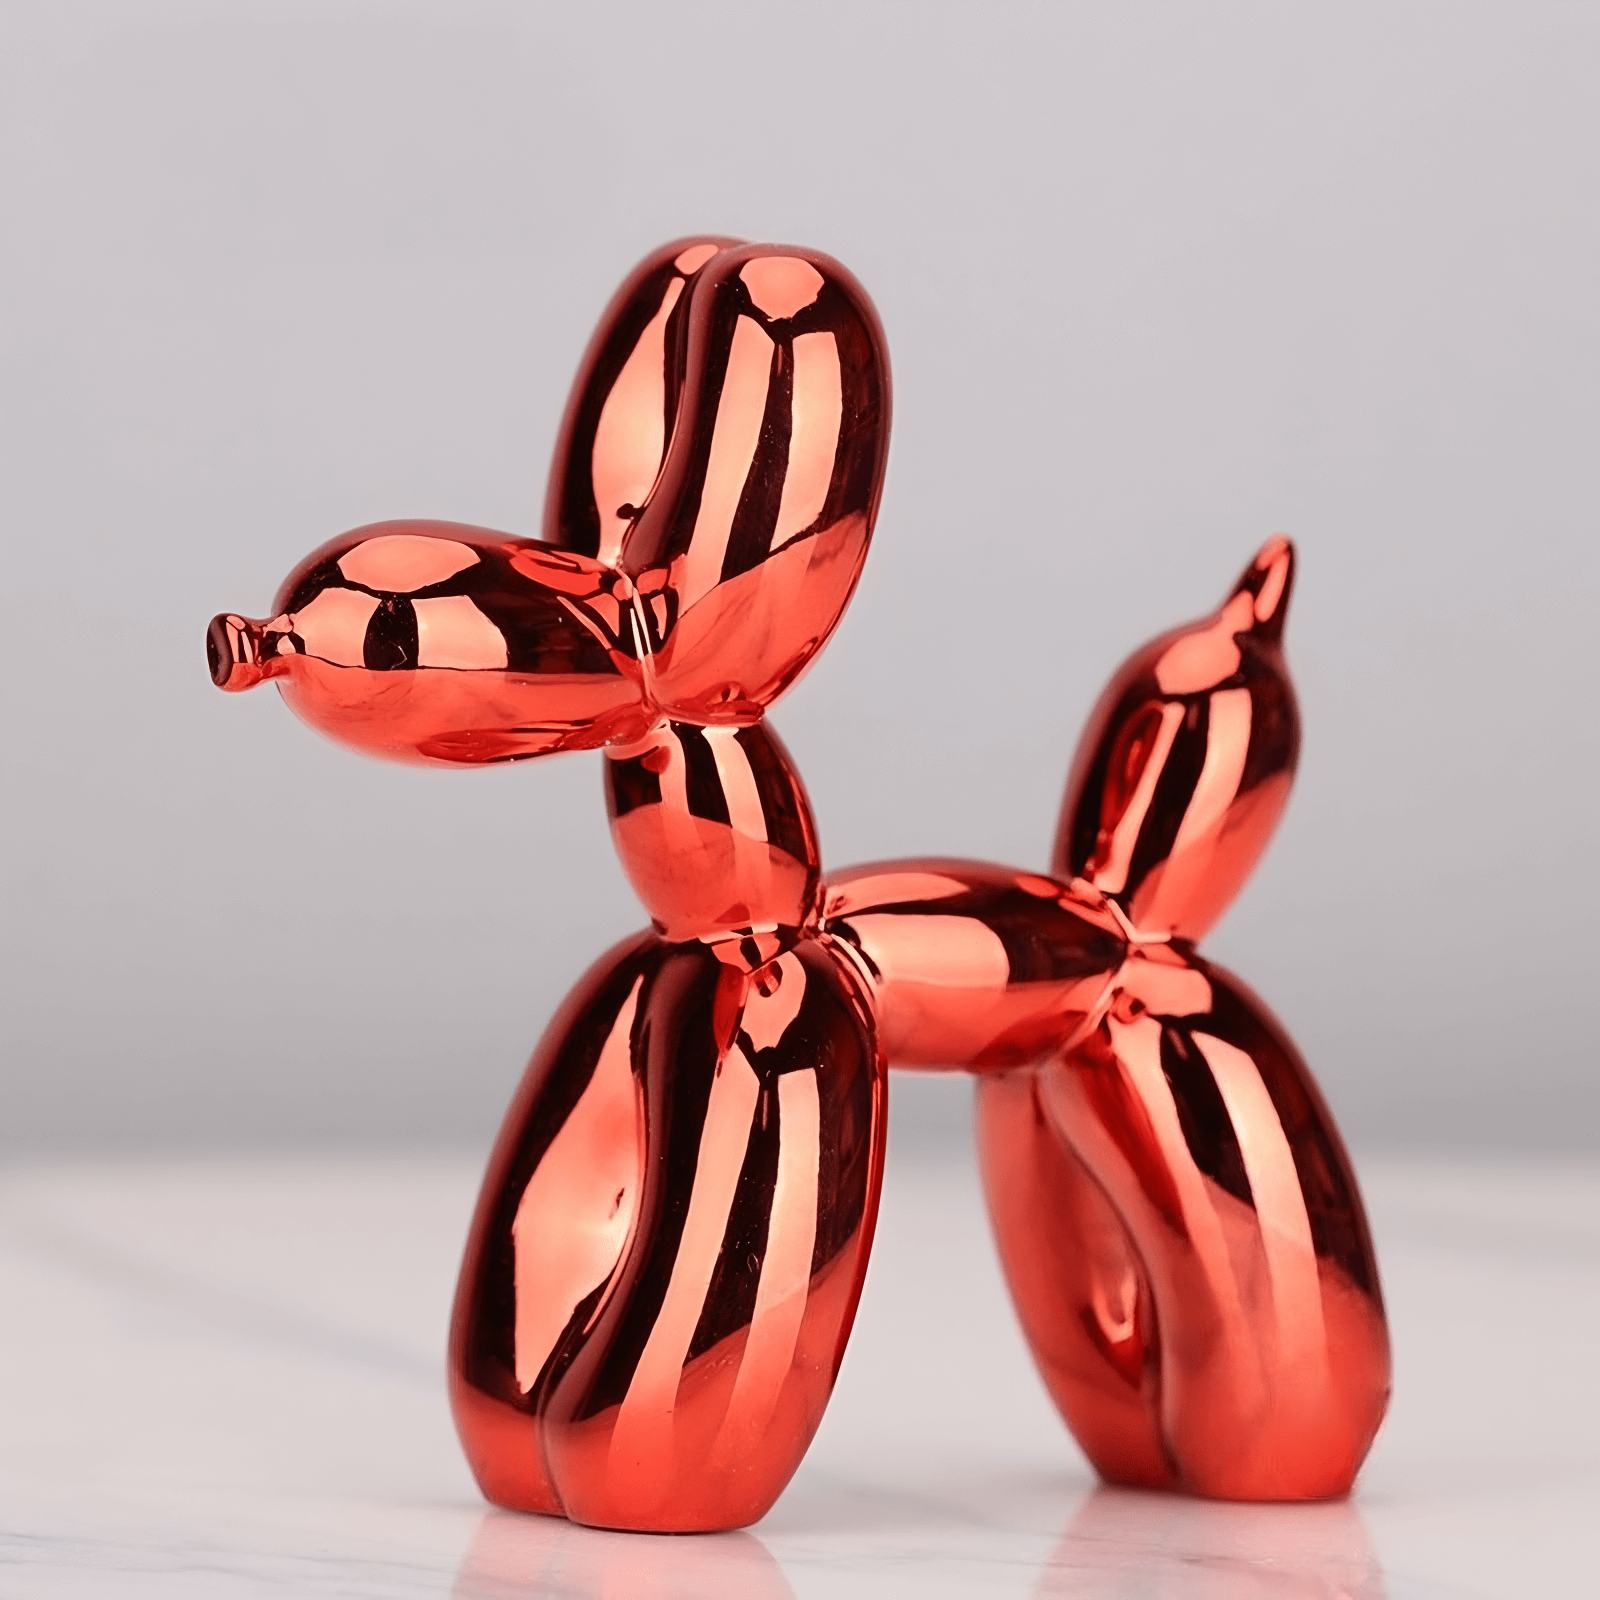 Red balloon dog